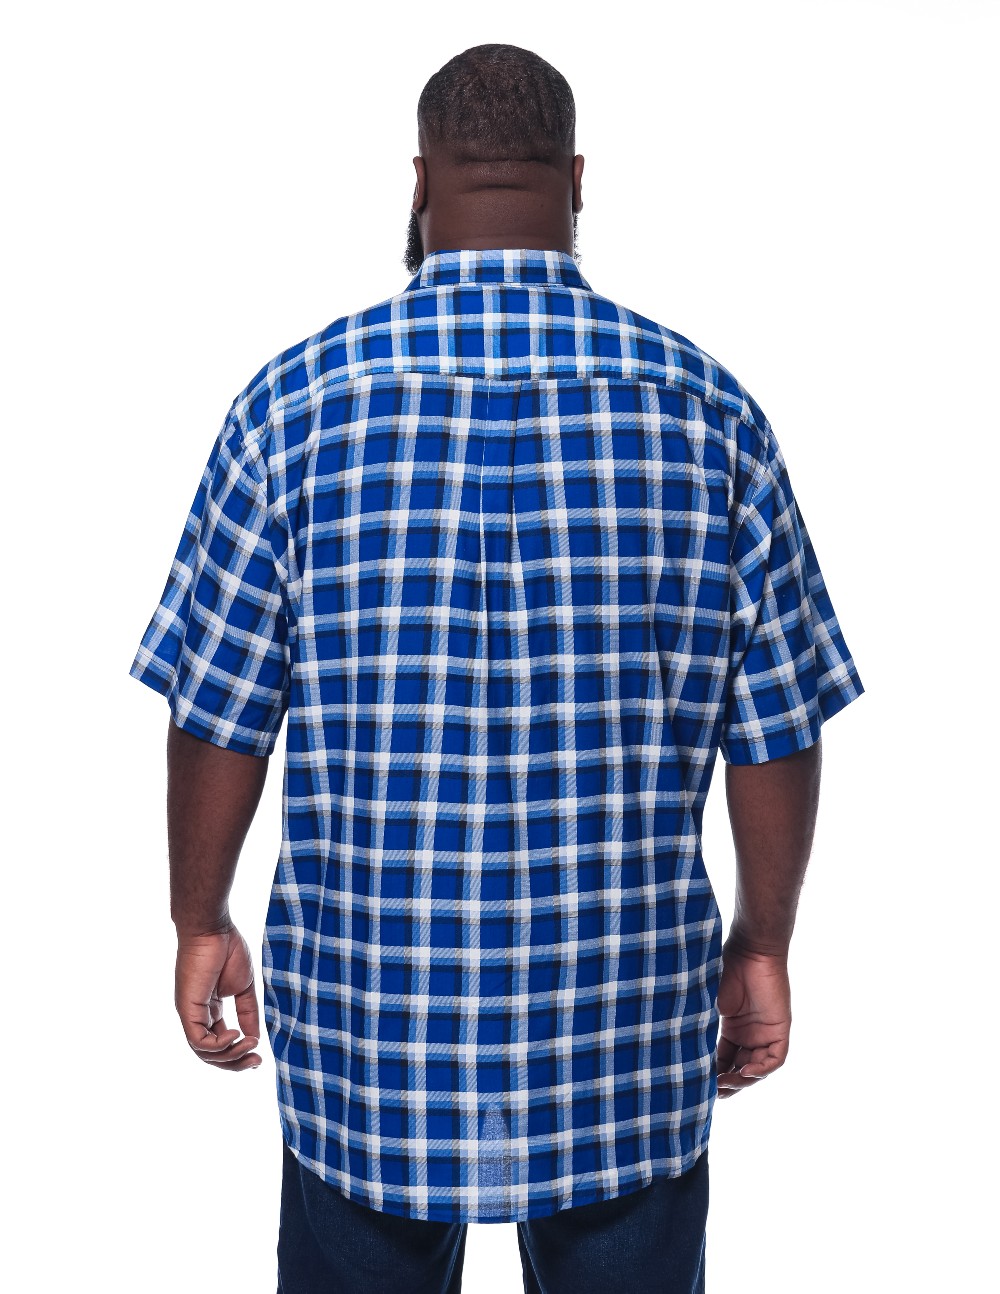 Camisa Manga Curta plus size Street Xadrez Azul